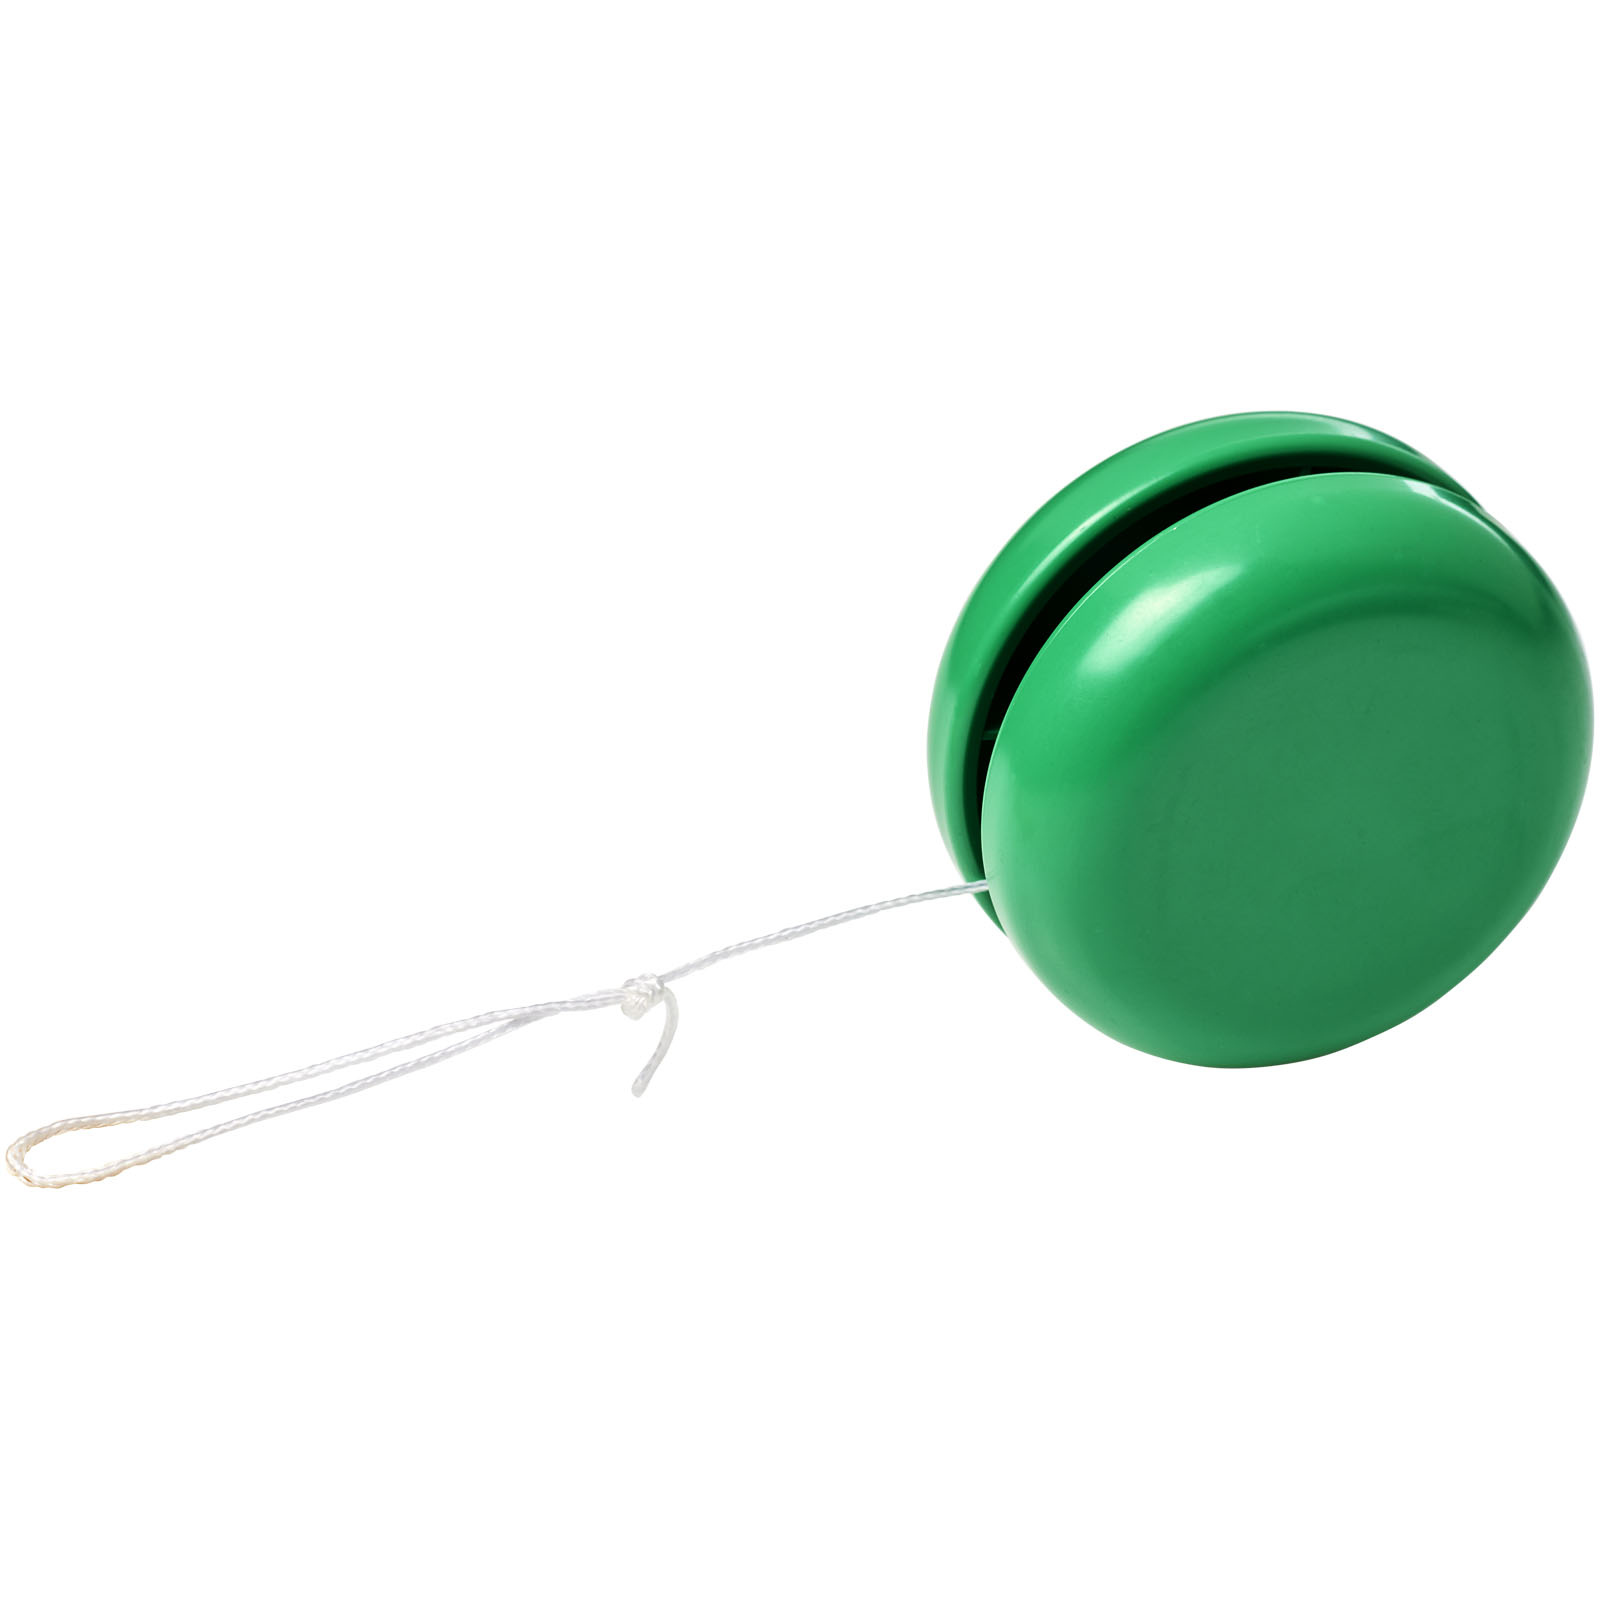 Advertising Indoor Games - Garo plastic yo-yo